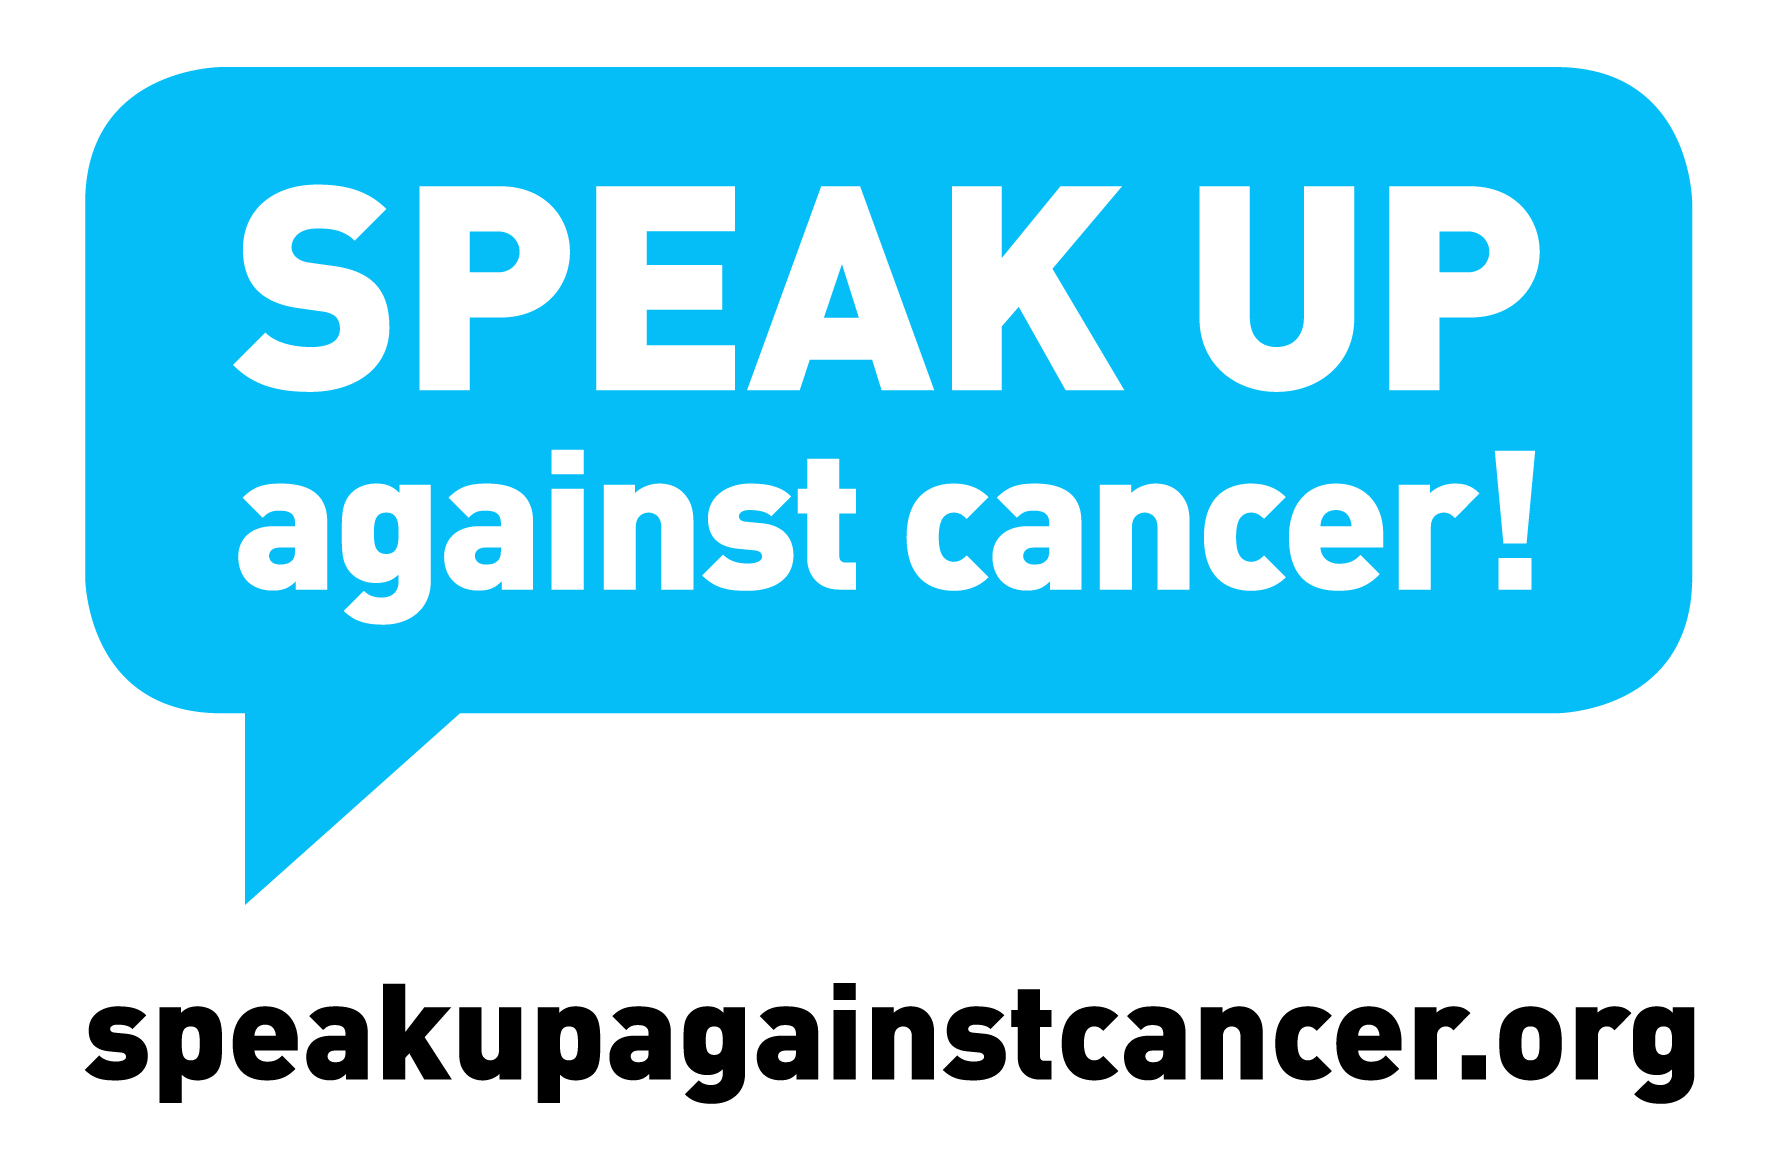 Speak Up Against Cancer: Charlie’s story